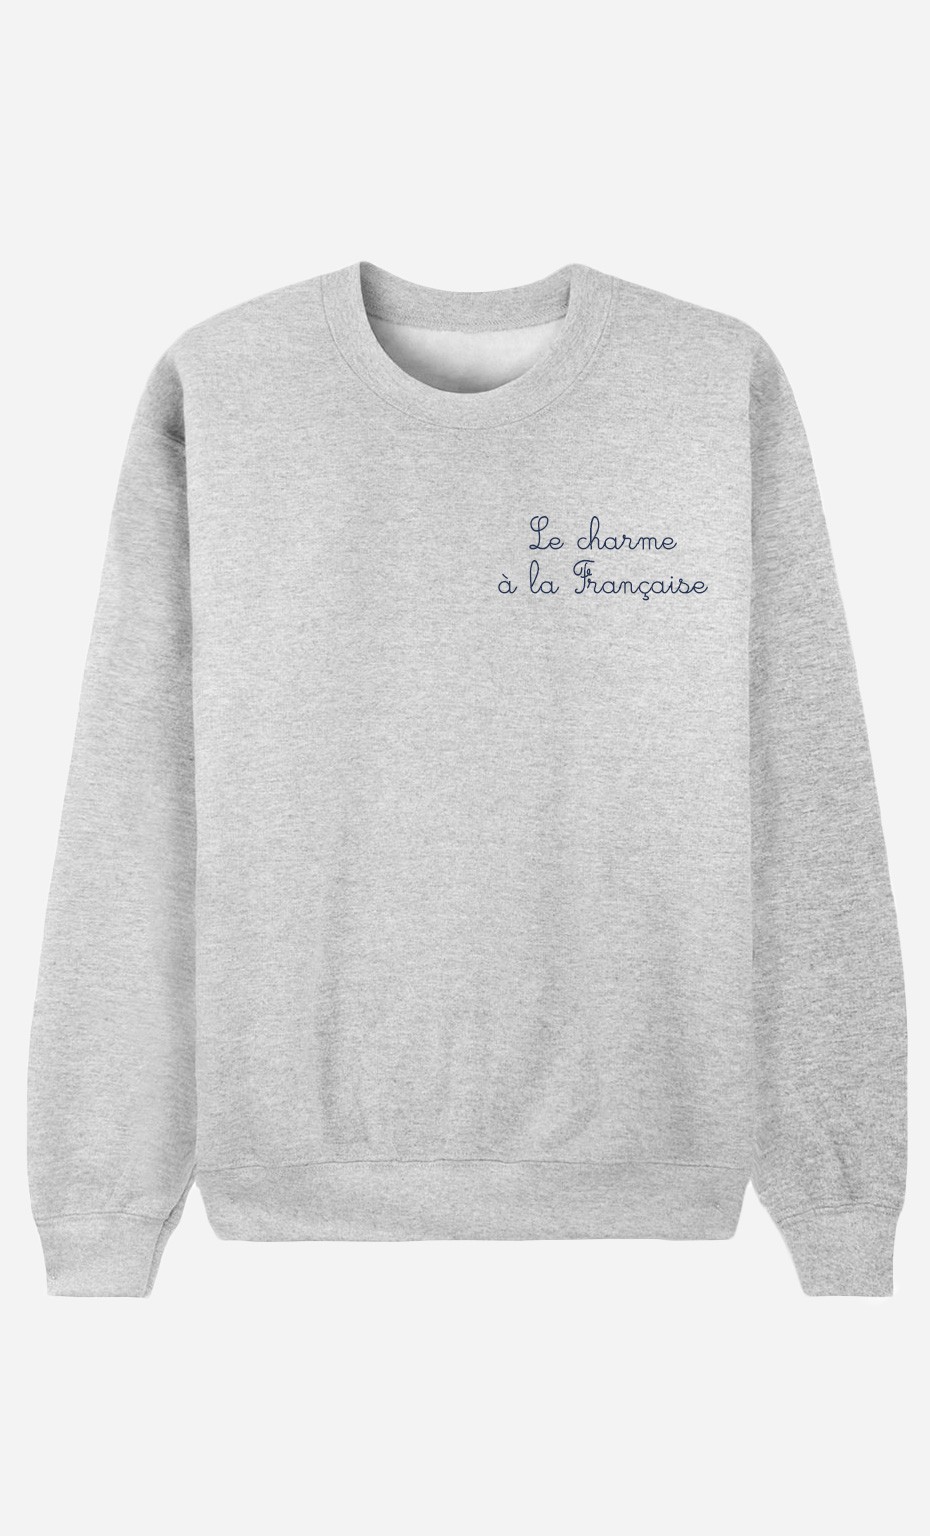 Sweatshirt Le Charme A La Française - embroidered